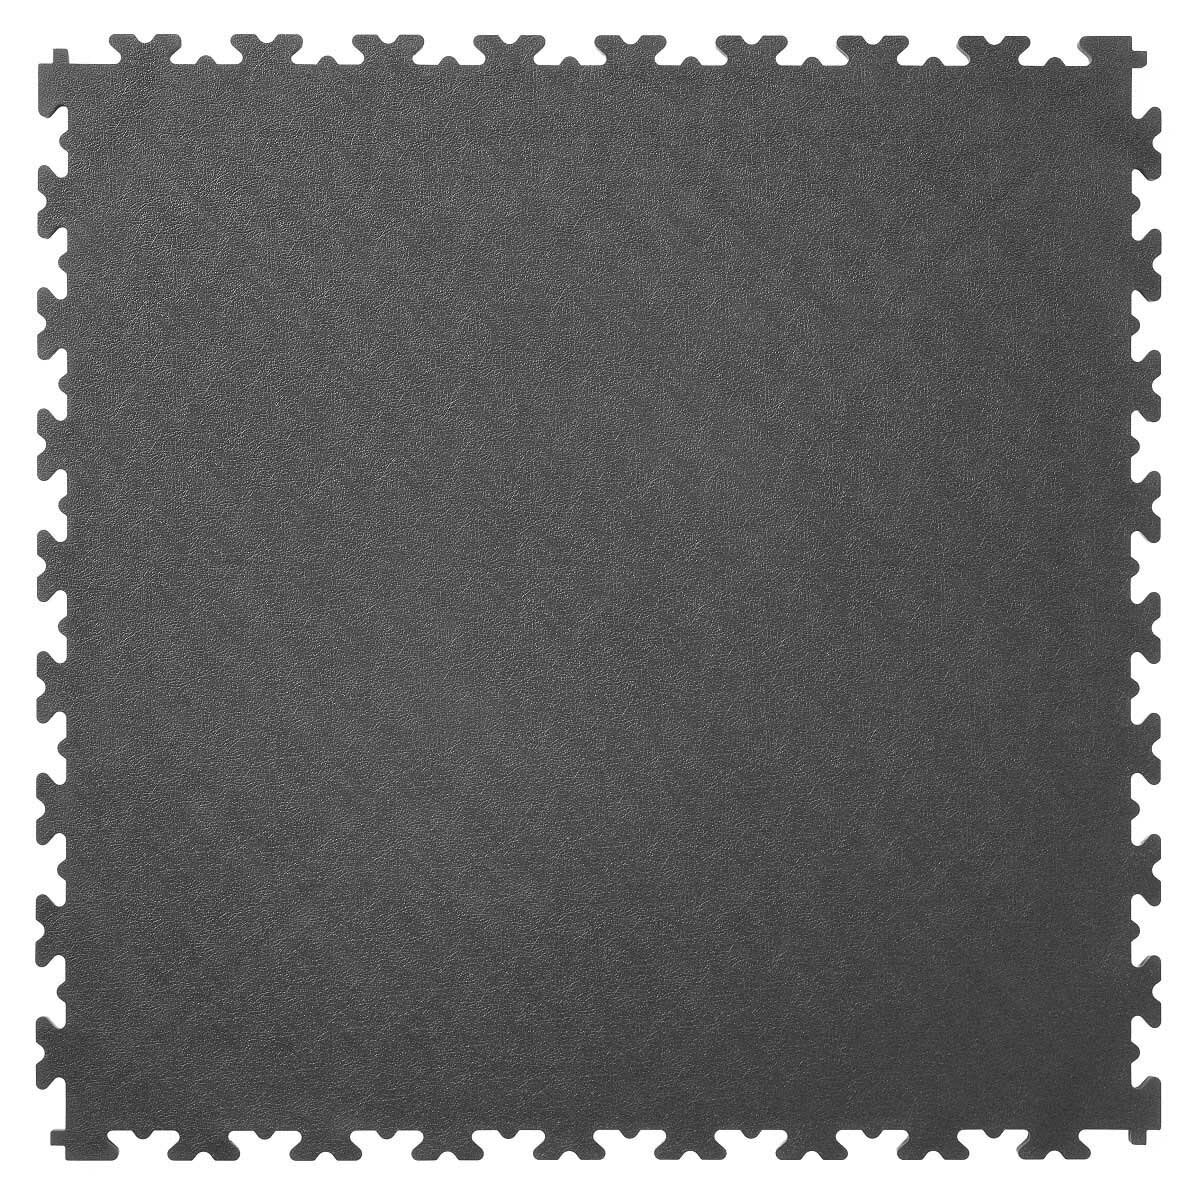 Klikflor X500 Garage Floor Tiles in Graphite (496 x 496 x 7mm) - 0.98m² per pack